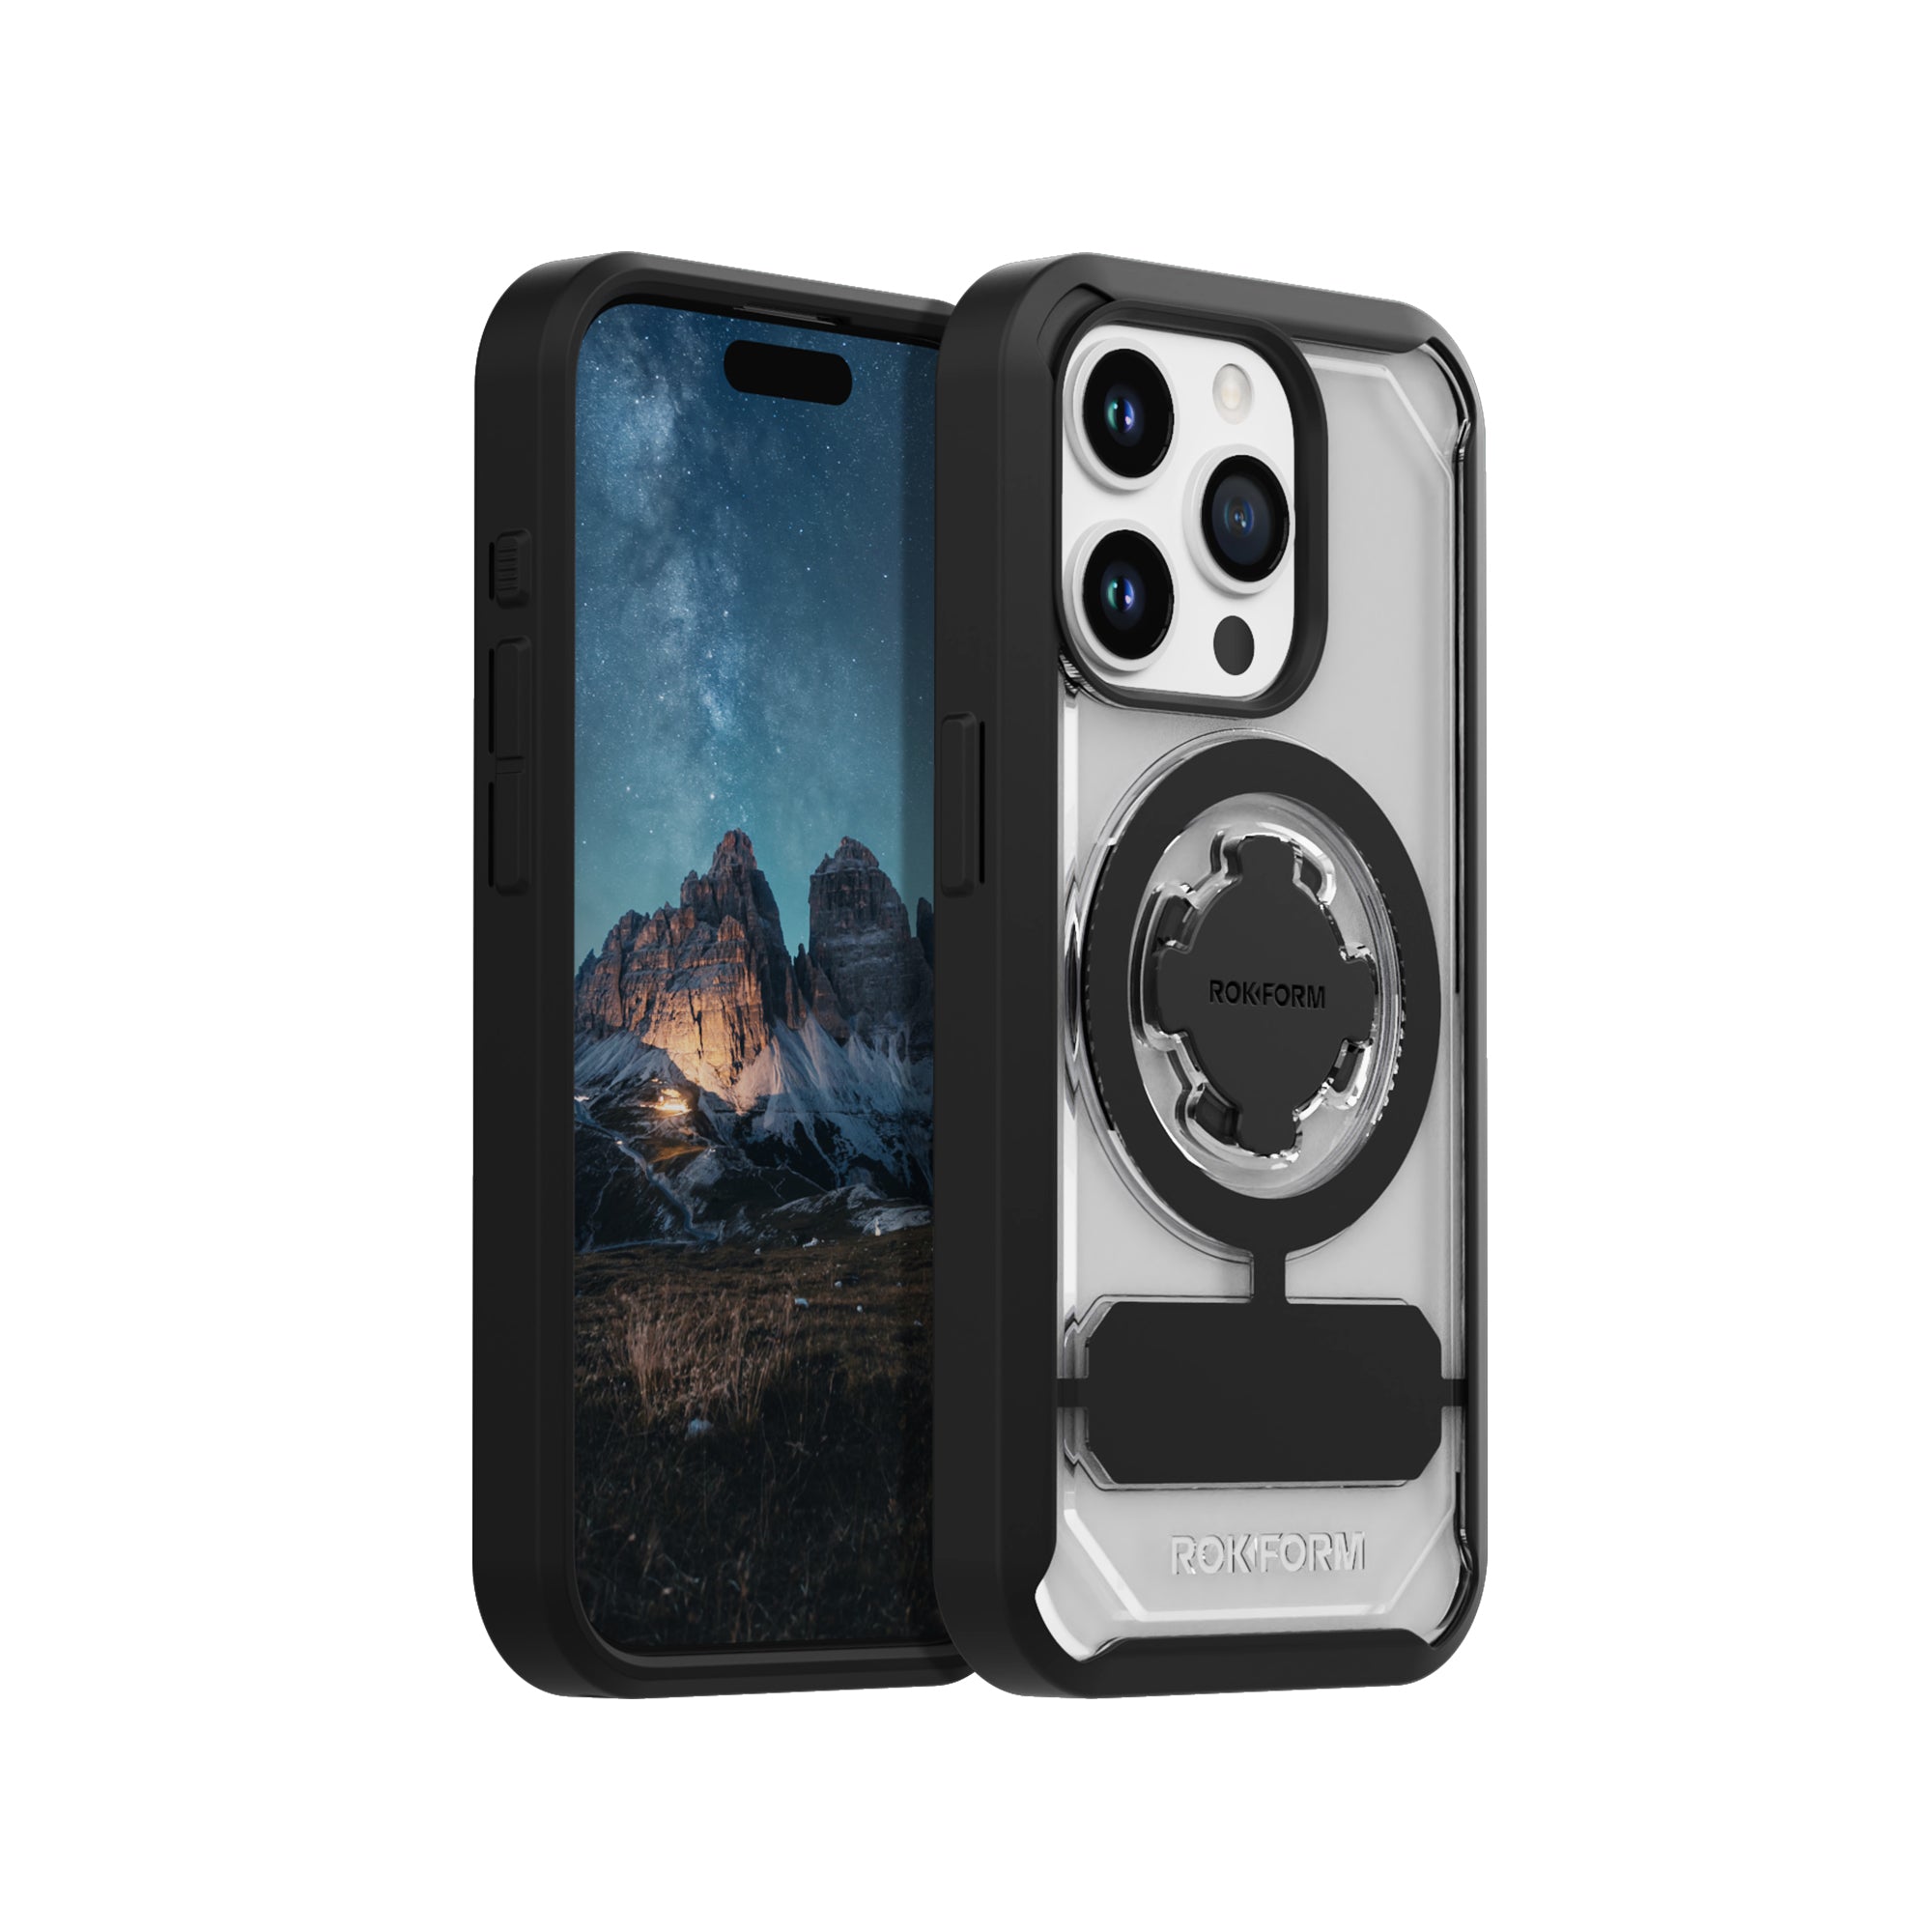 Cool Protective iPhone11 Cases - RhinoShield  Apple phone case, Pretty  iphone cases, Iphone case covers